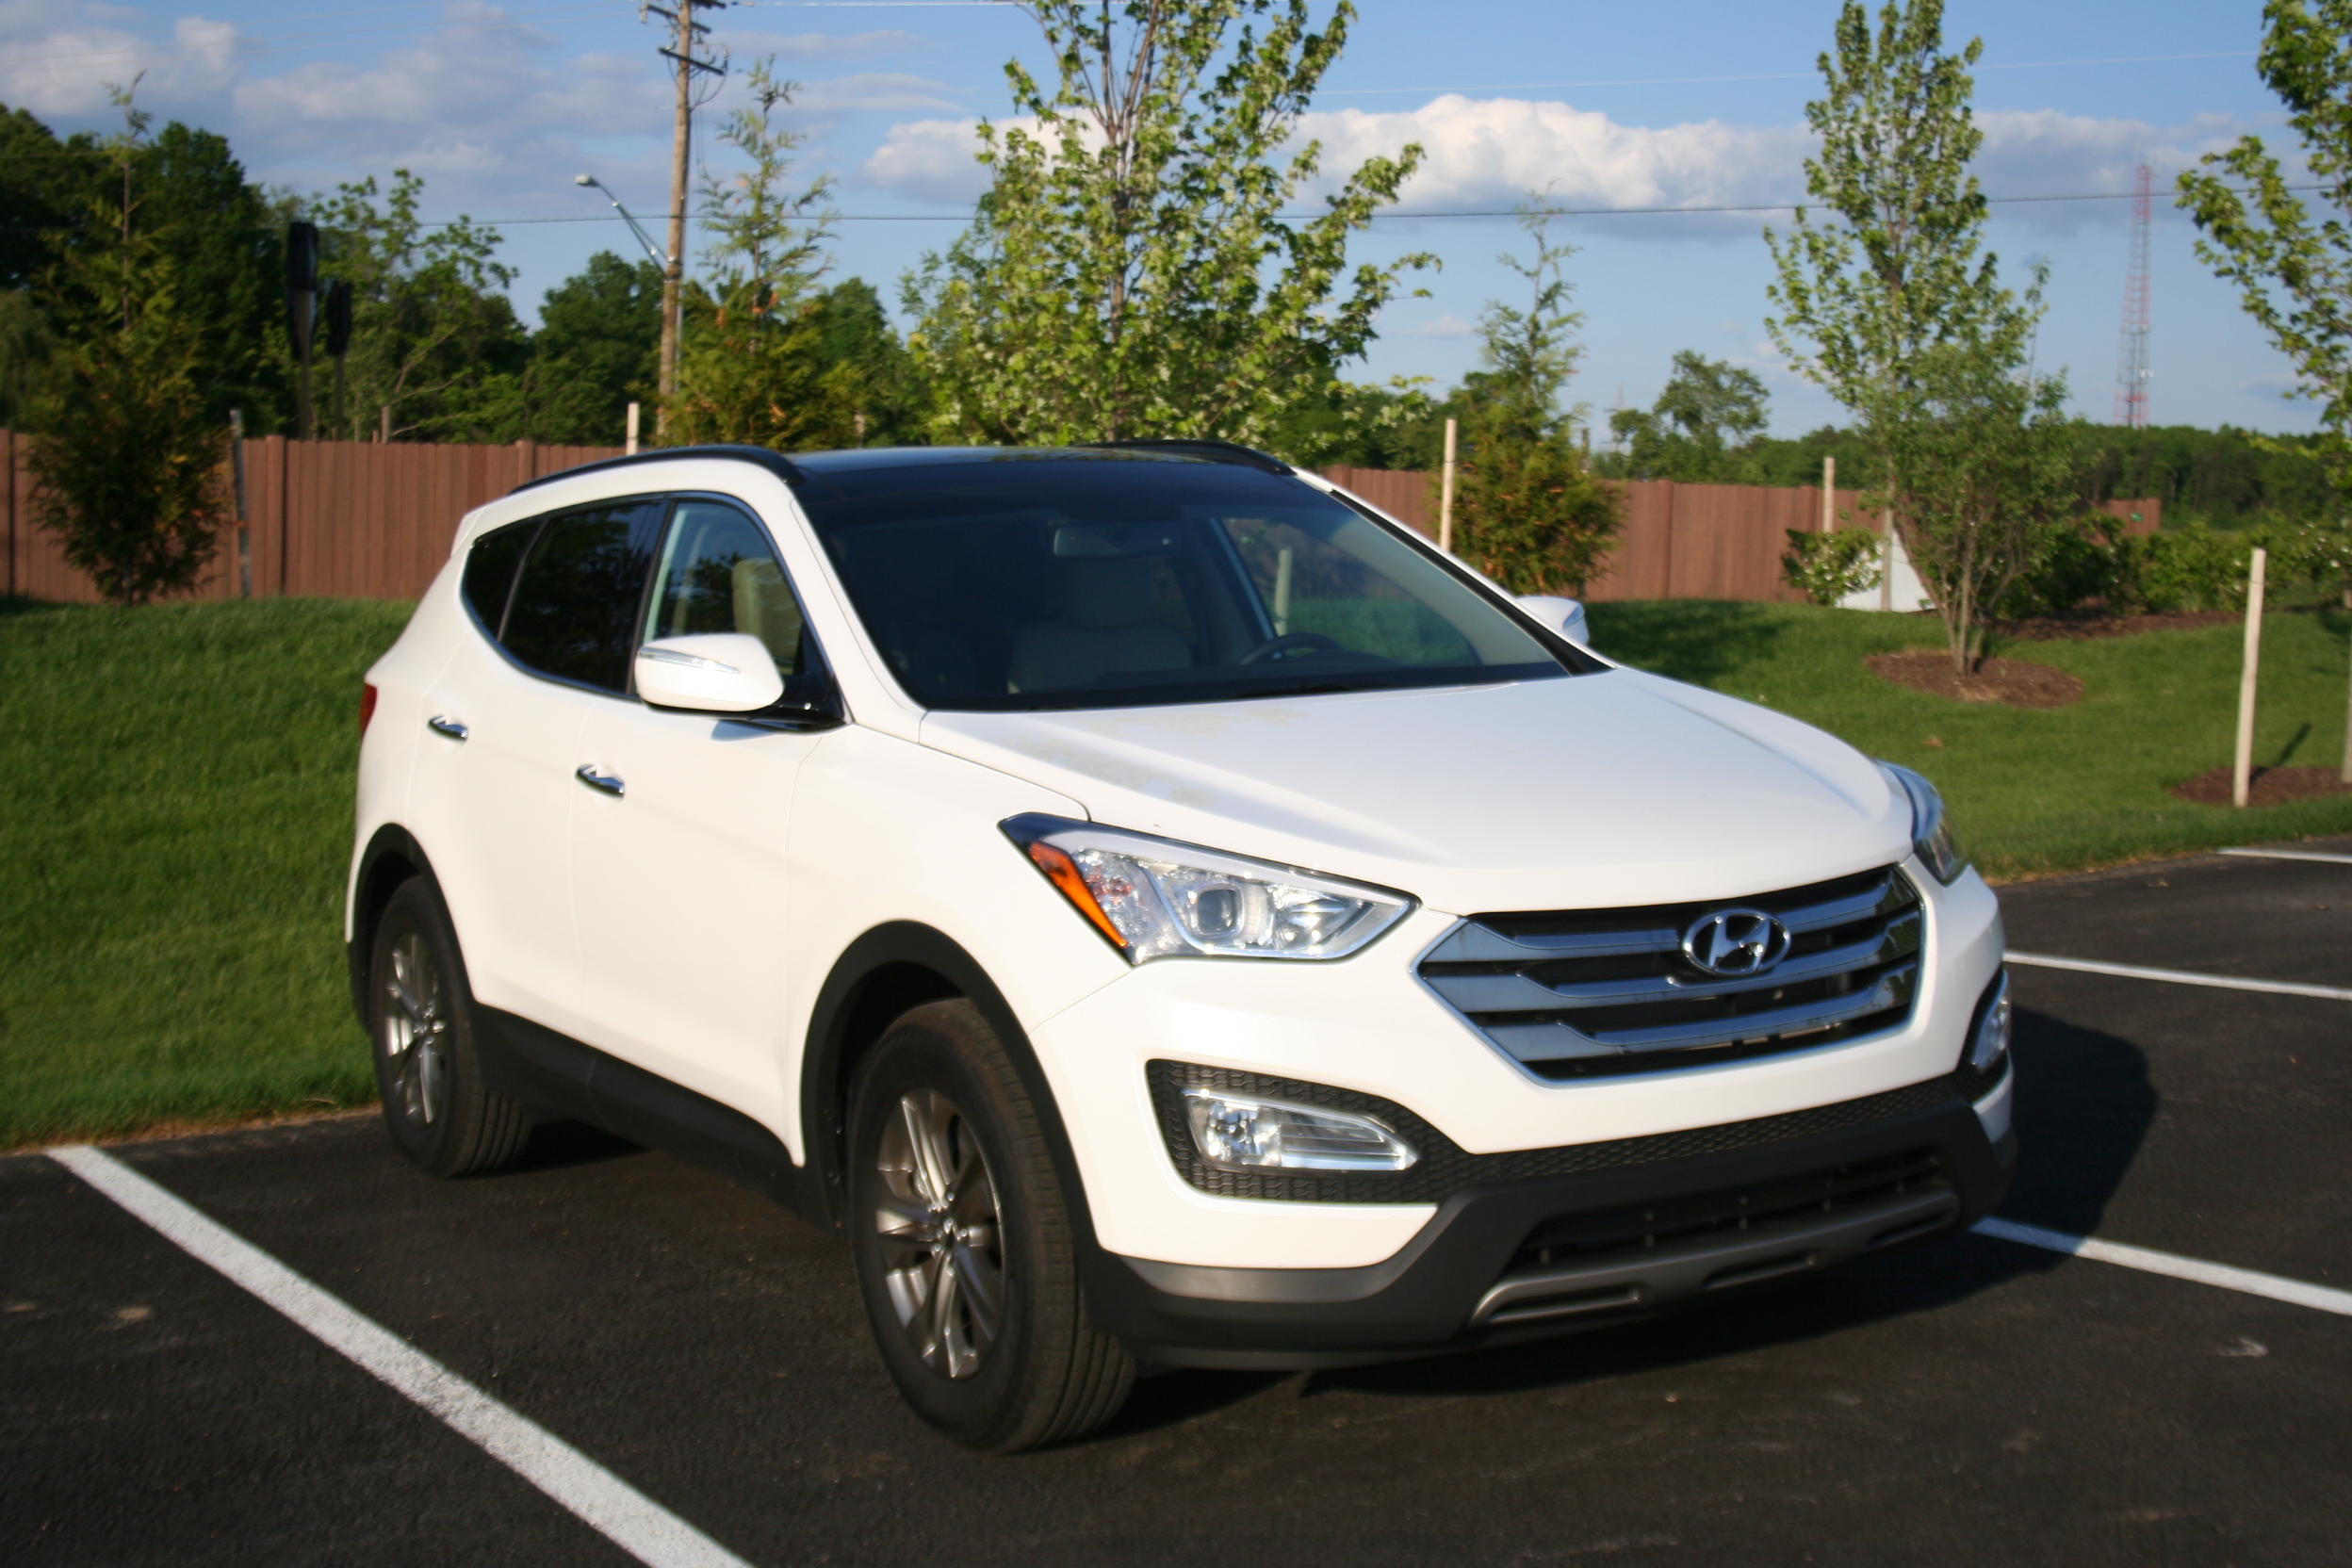 Car Report: Hyundai Santa Fe Sport muscles into the small crossover market